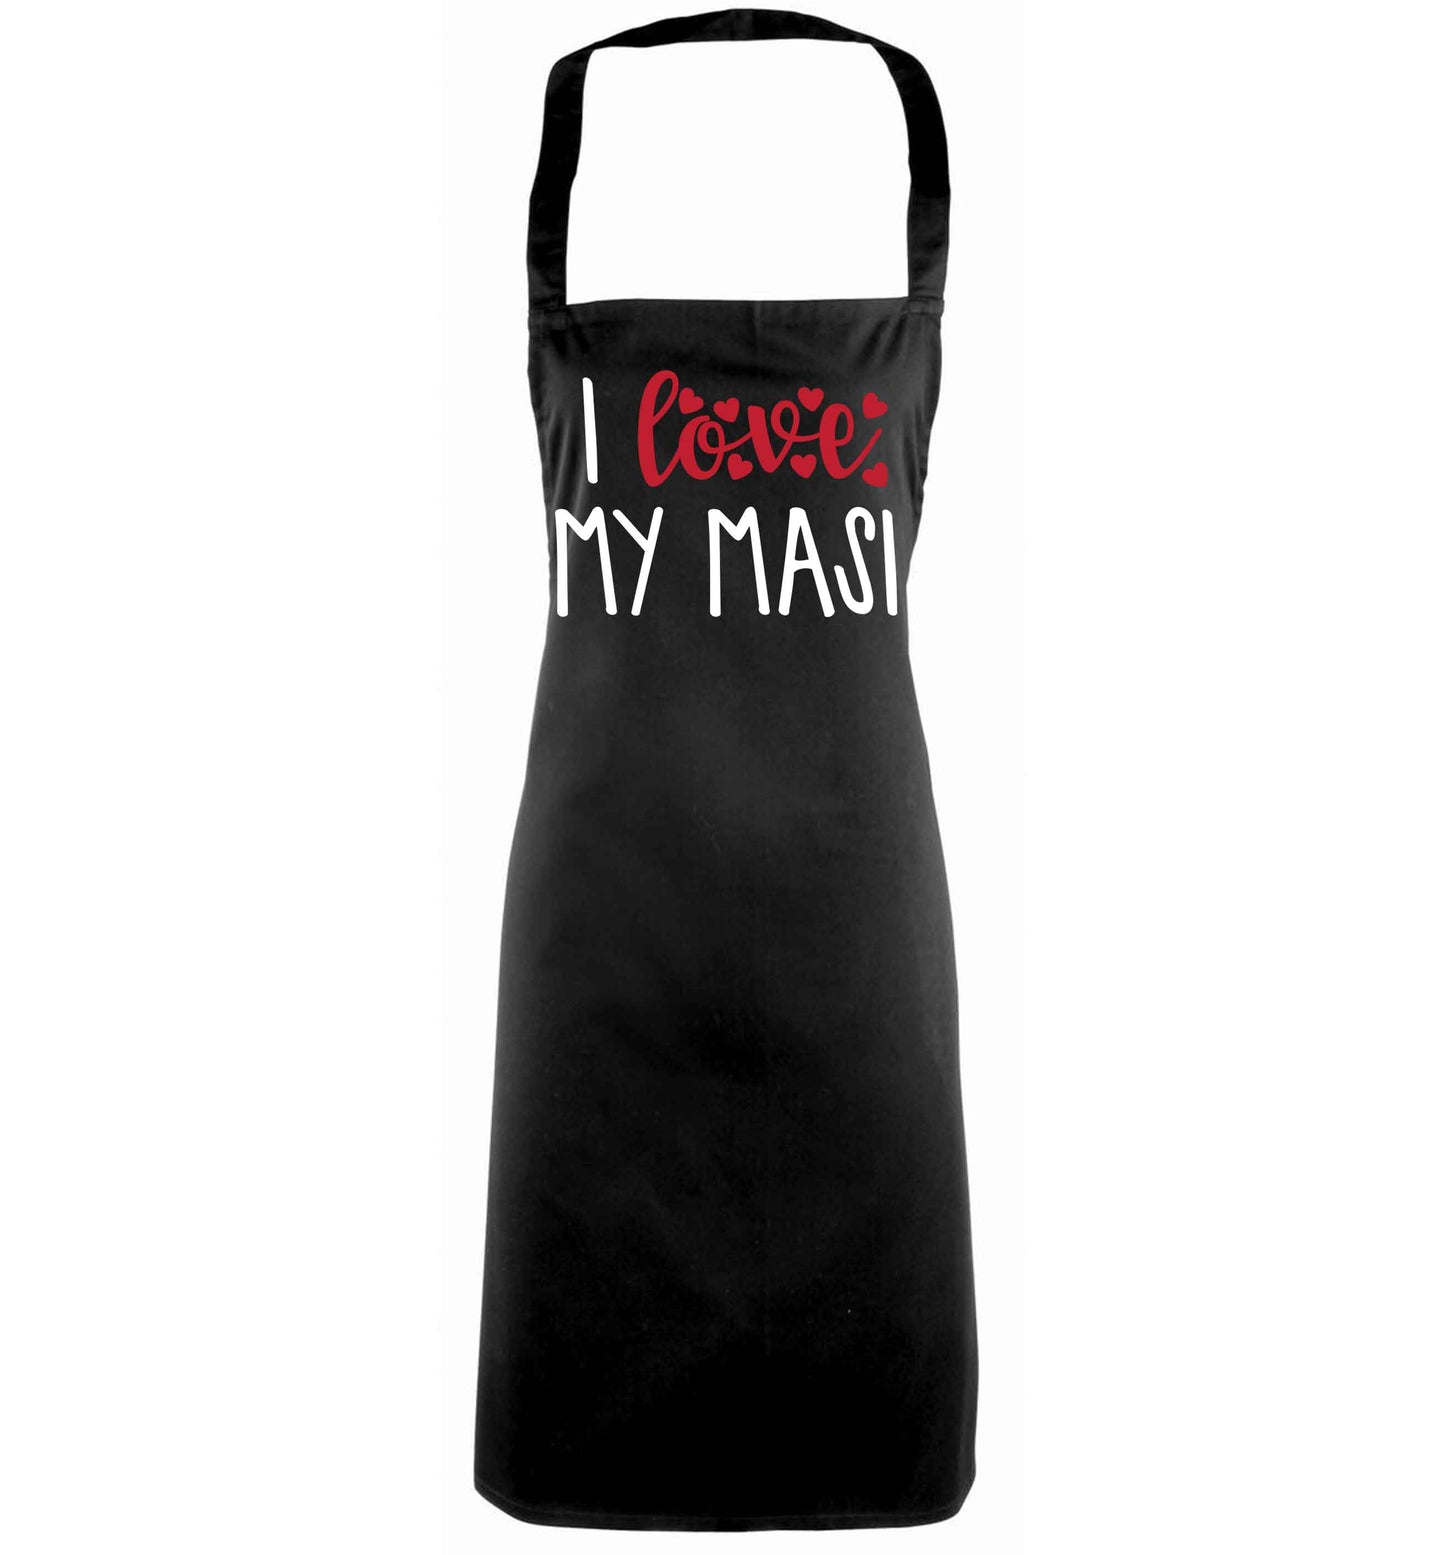 I love my masi black apron